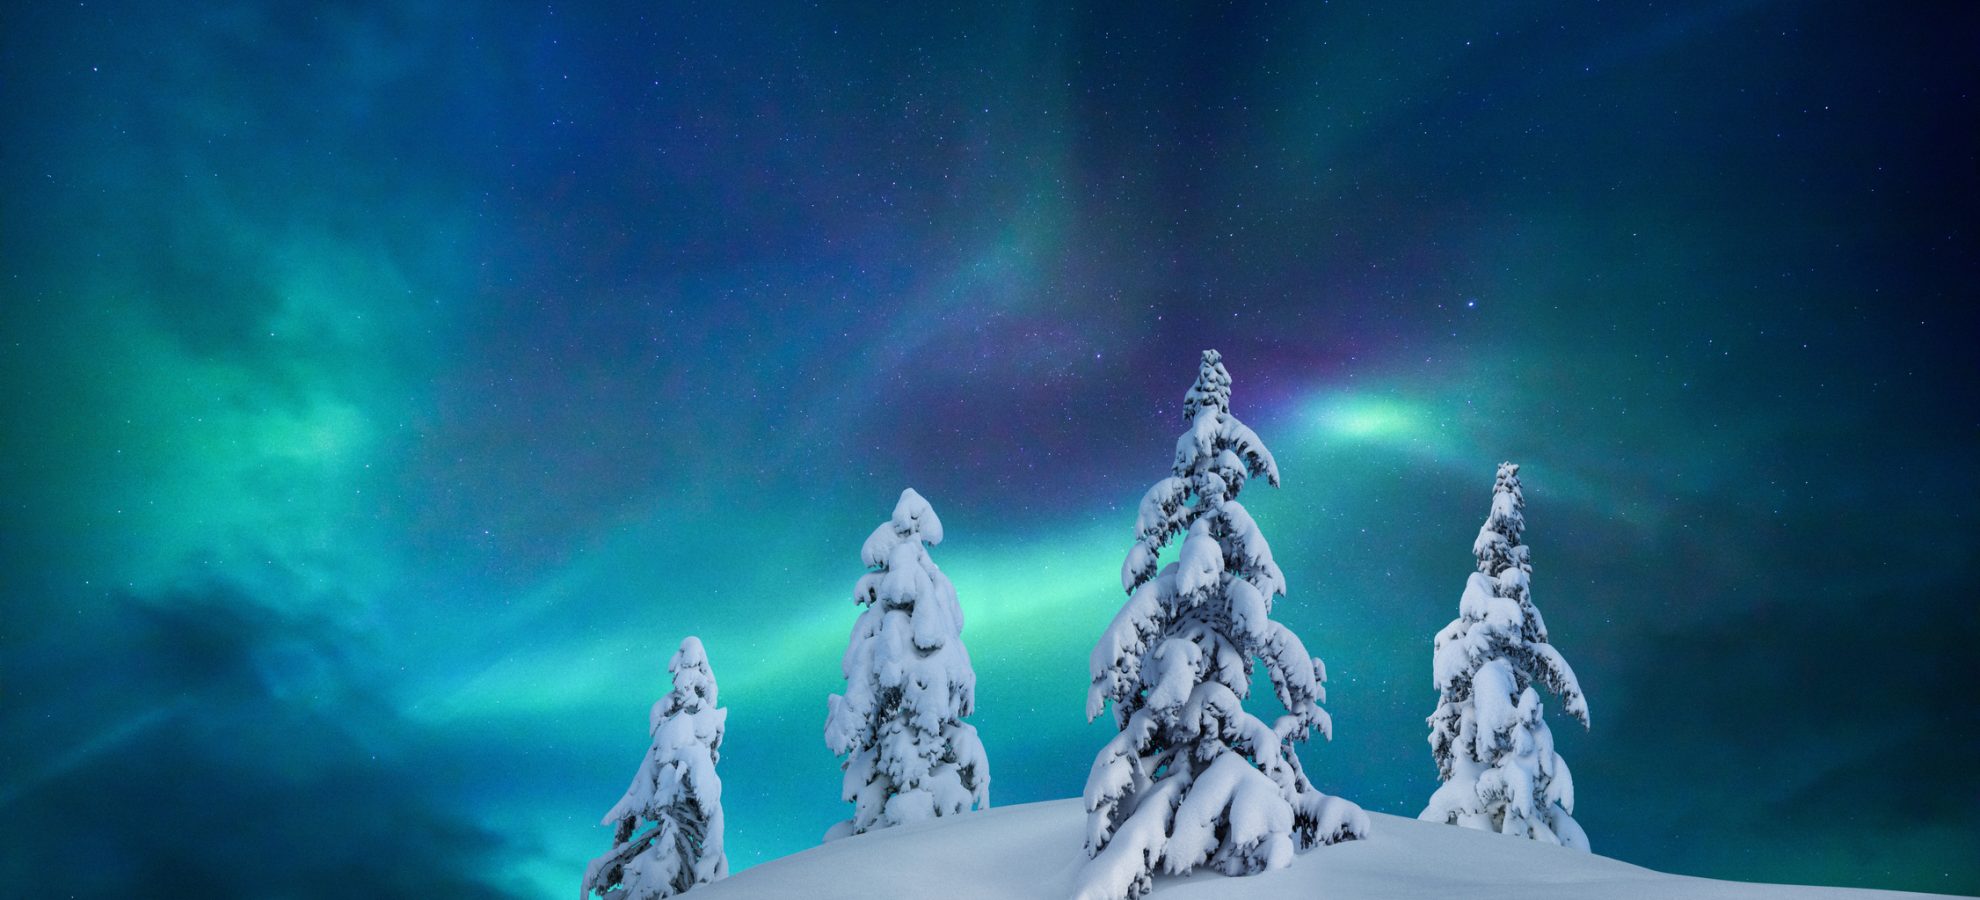 Finland - Aurora Borealis nacht